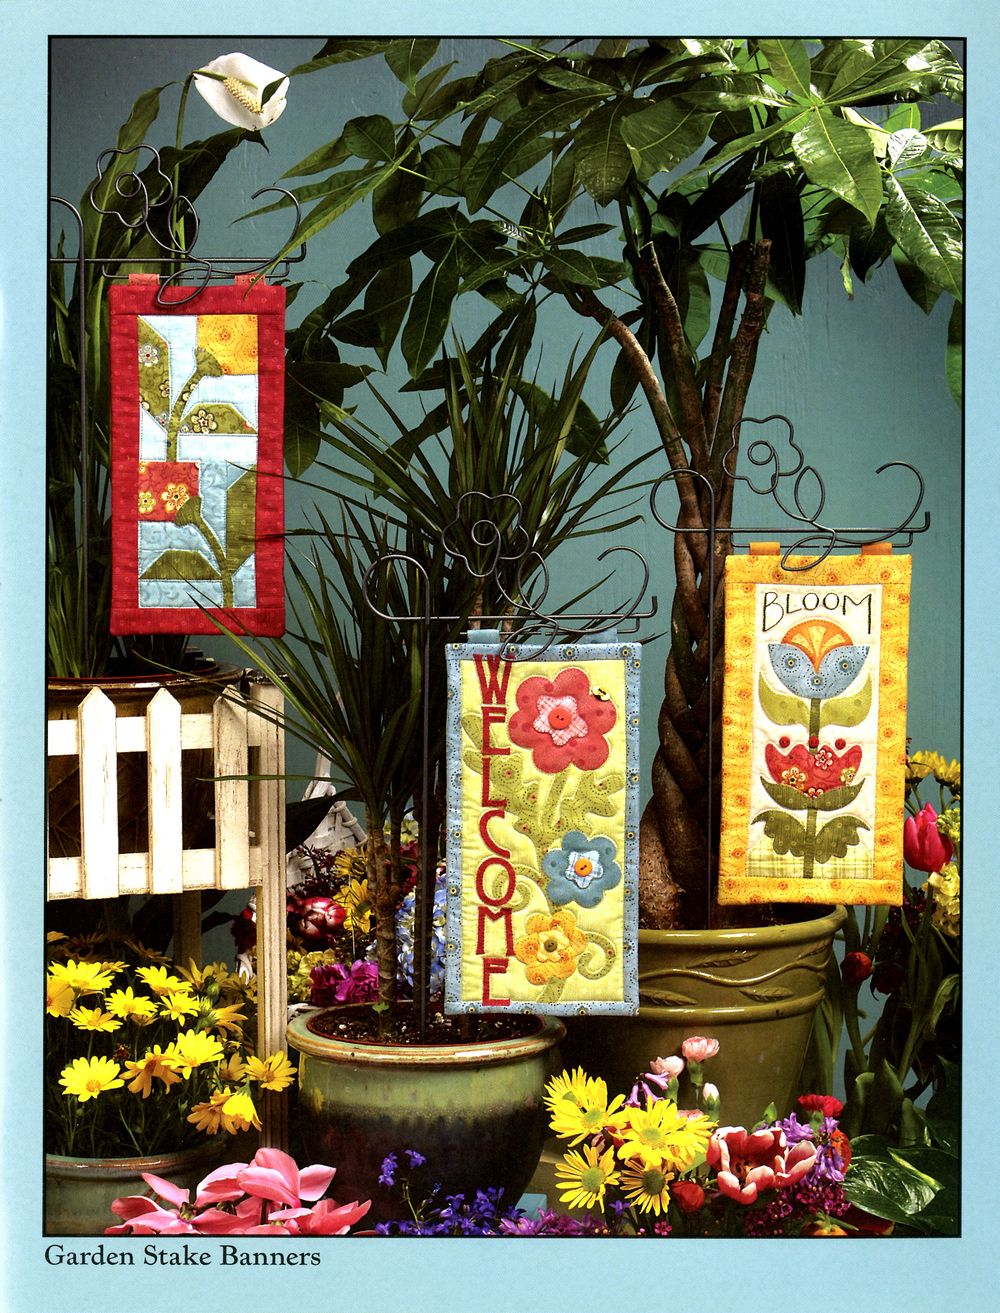 Garden Song Quilt Pattern Book by Nancy Halvorsen of Art to Heart